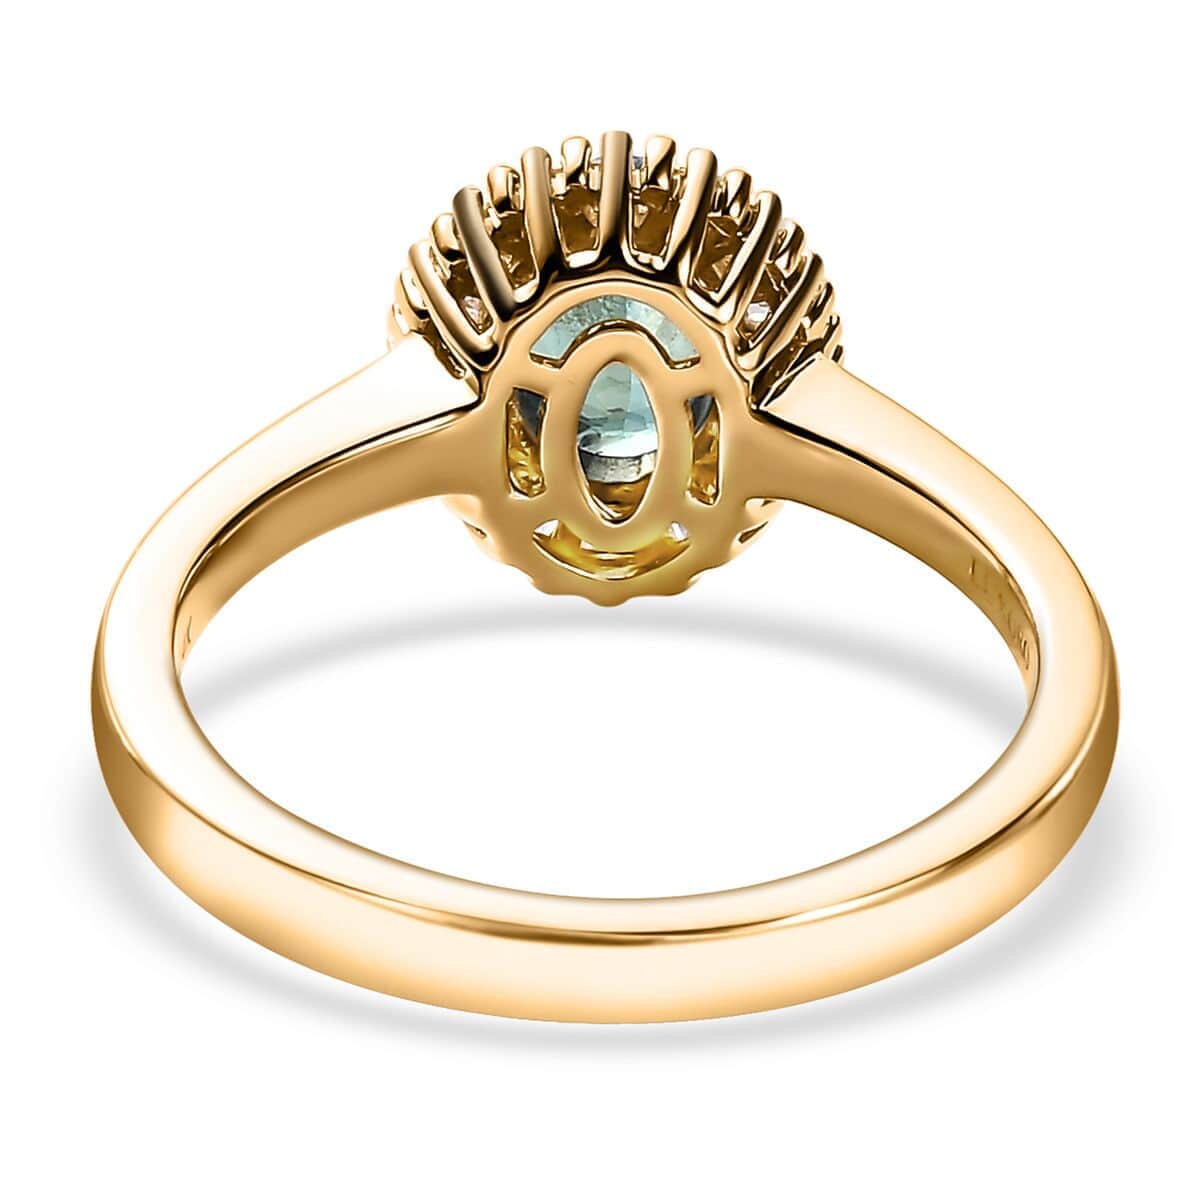 Luxoro 14K Yellow Gold AAA Narsipatnam Alexandrite and G-H I2 Diamond Halo Ring (Size 8.0) 4 Grams 1.50 ctw image number 4